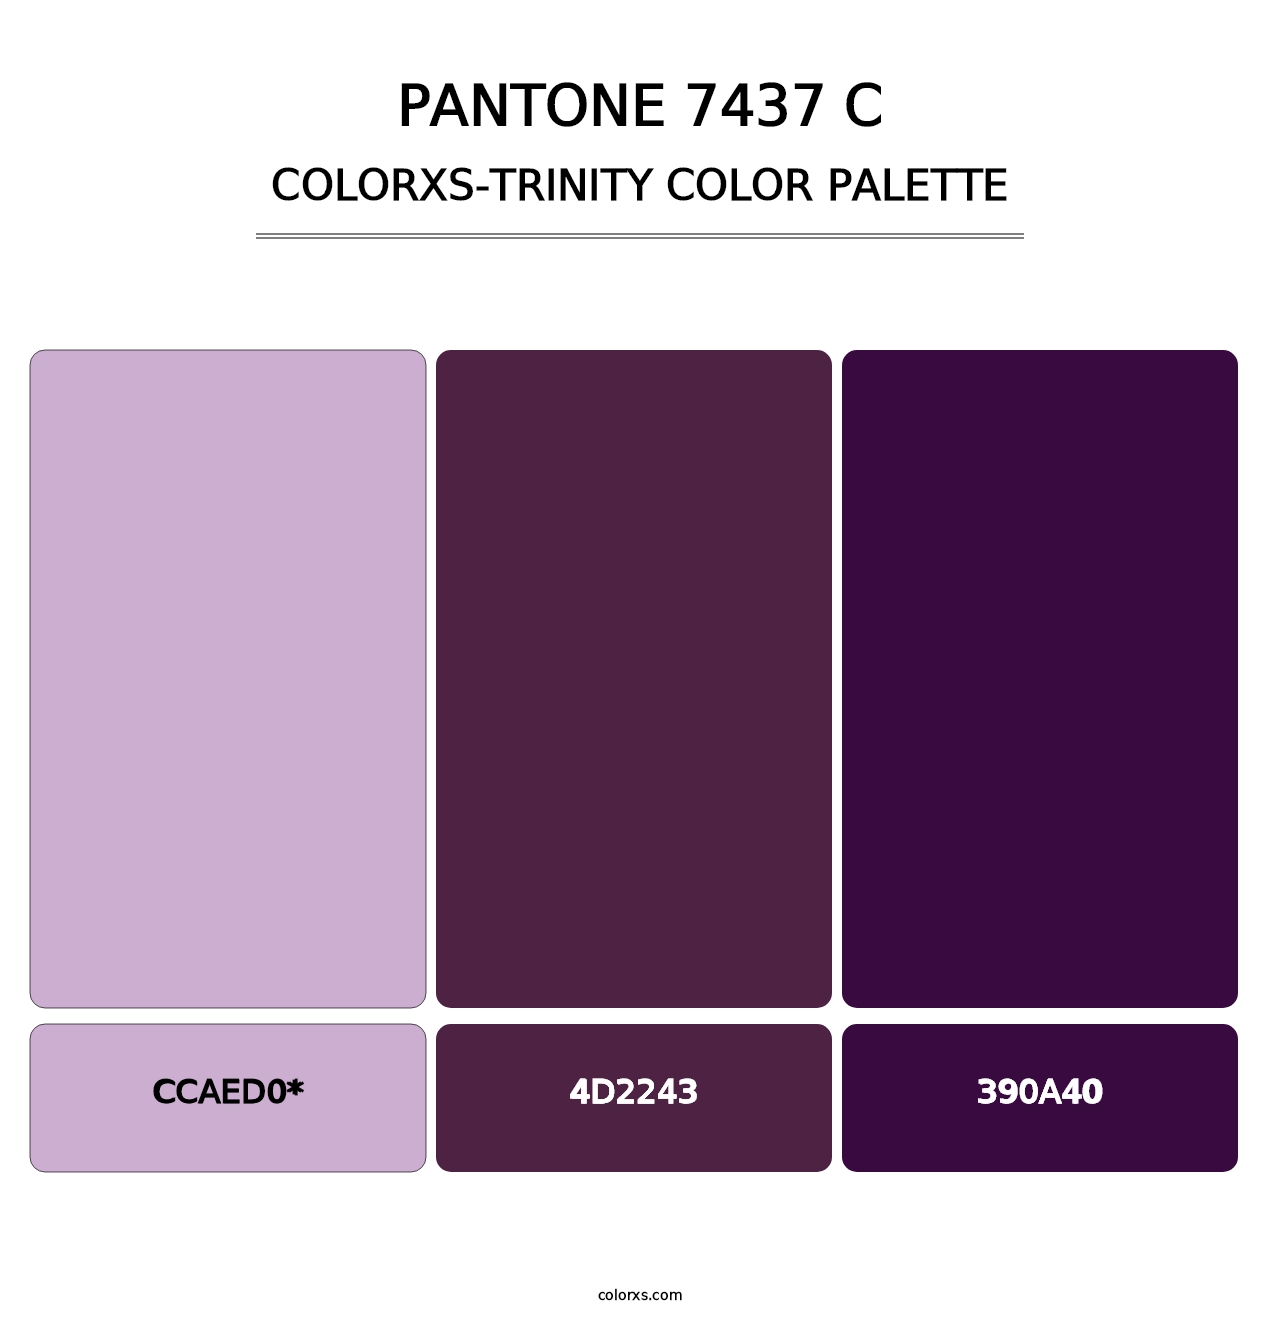 PANTONE 7437 C - Colorxs Trinity Palette